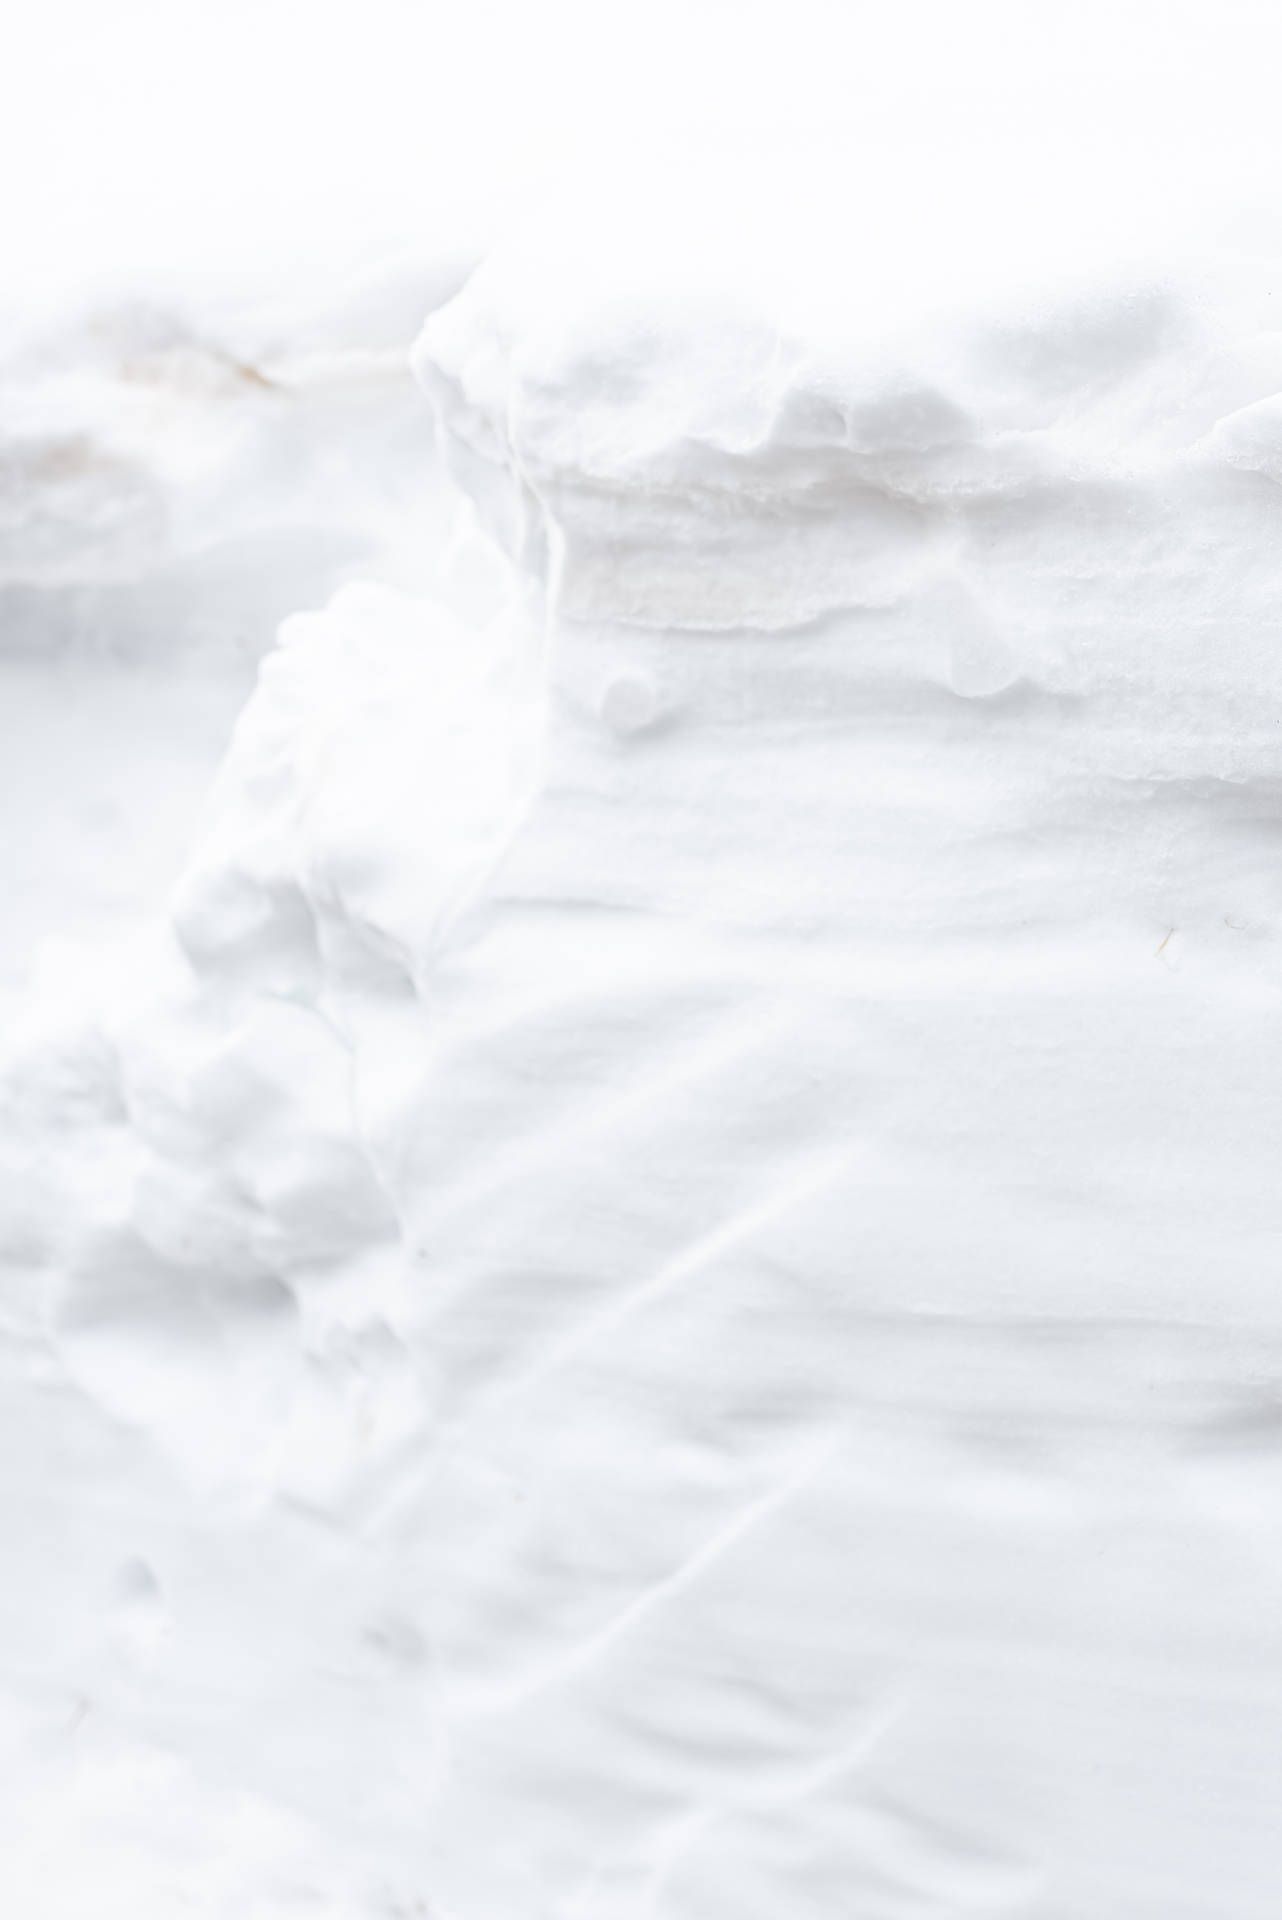 Download White Aesthetic Snow Wallpaper